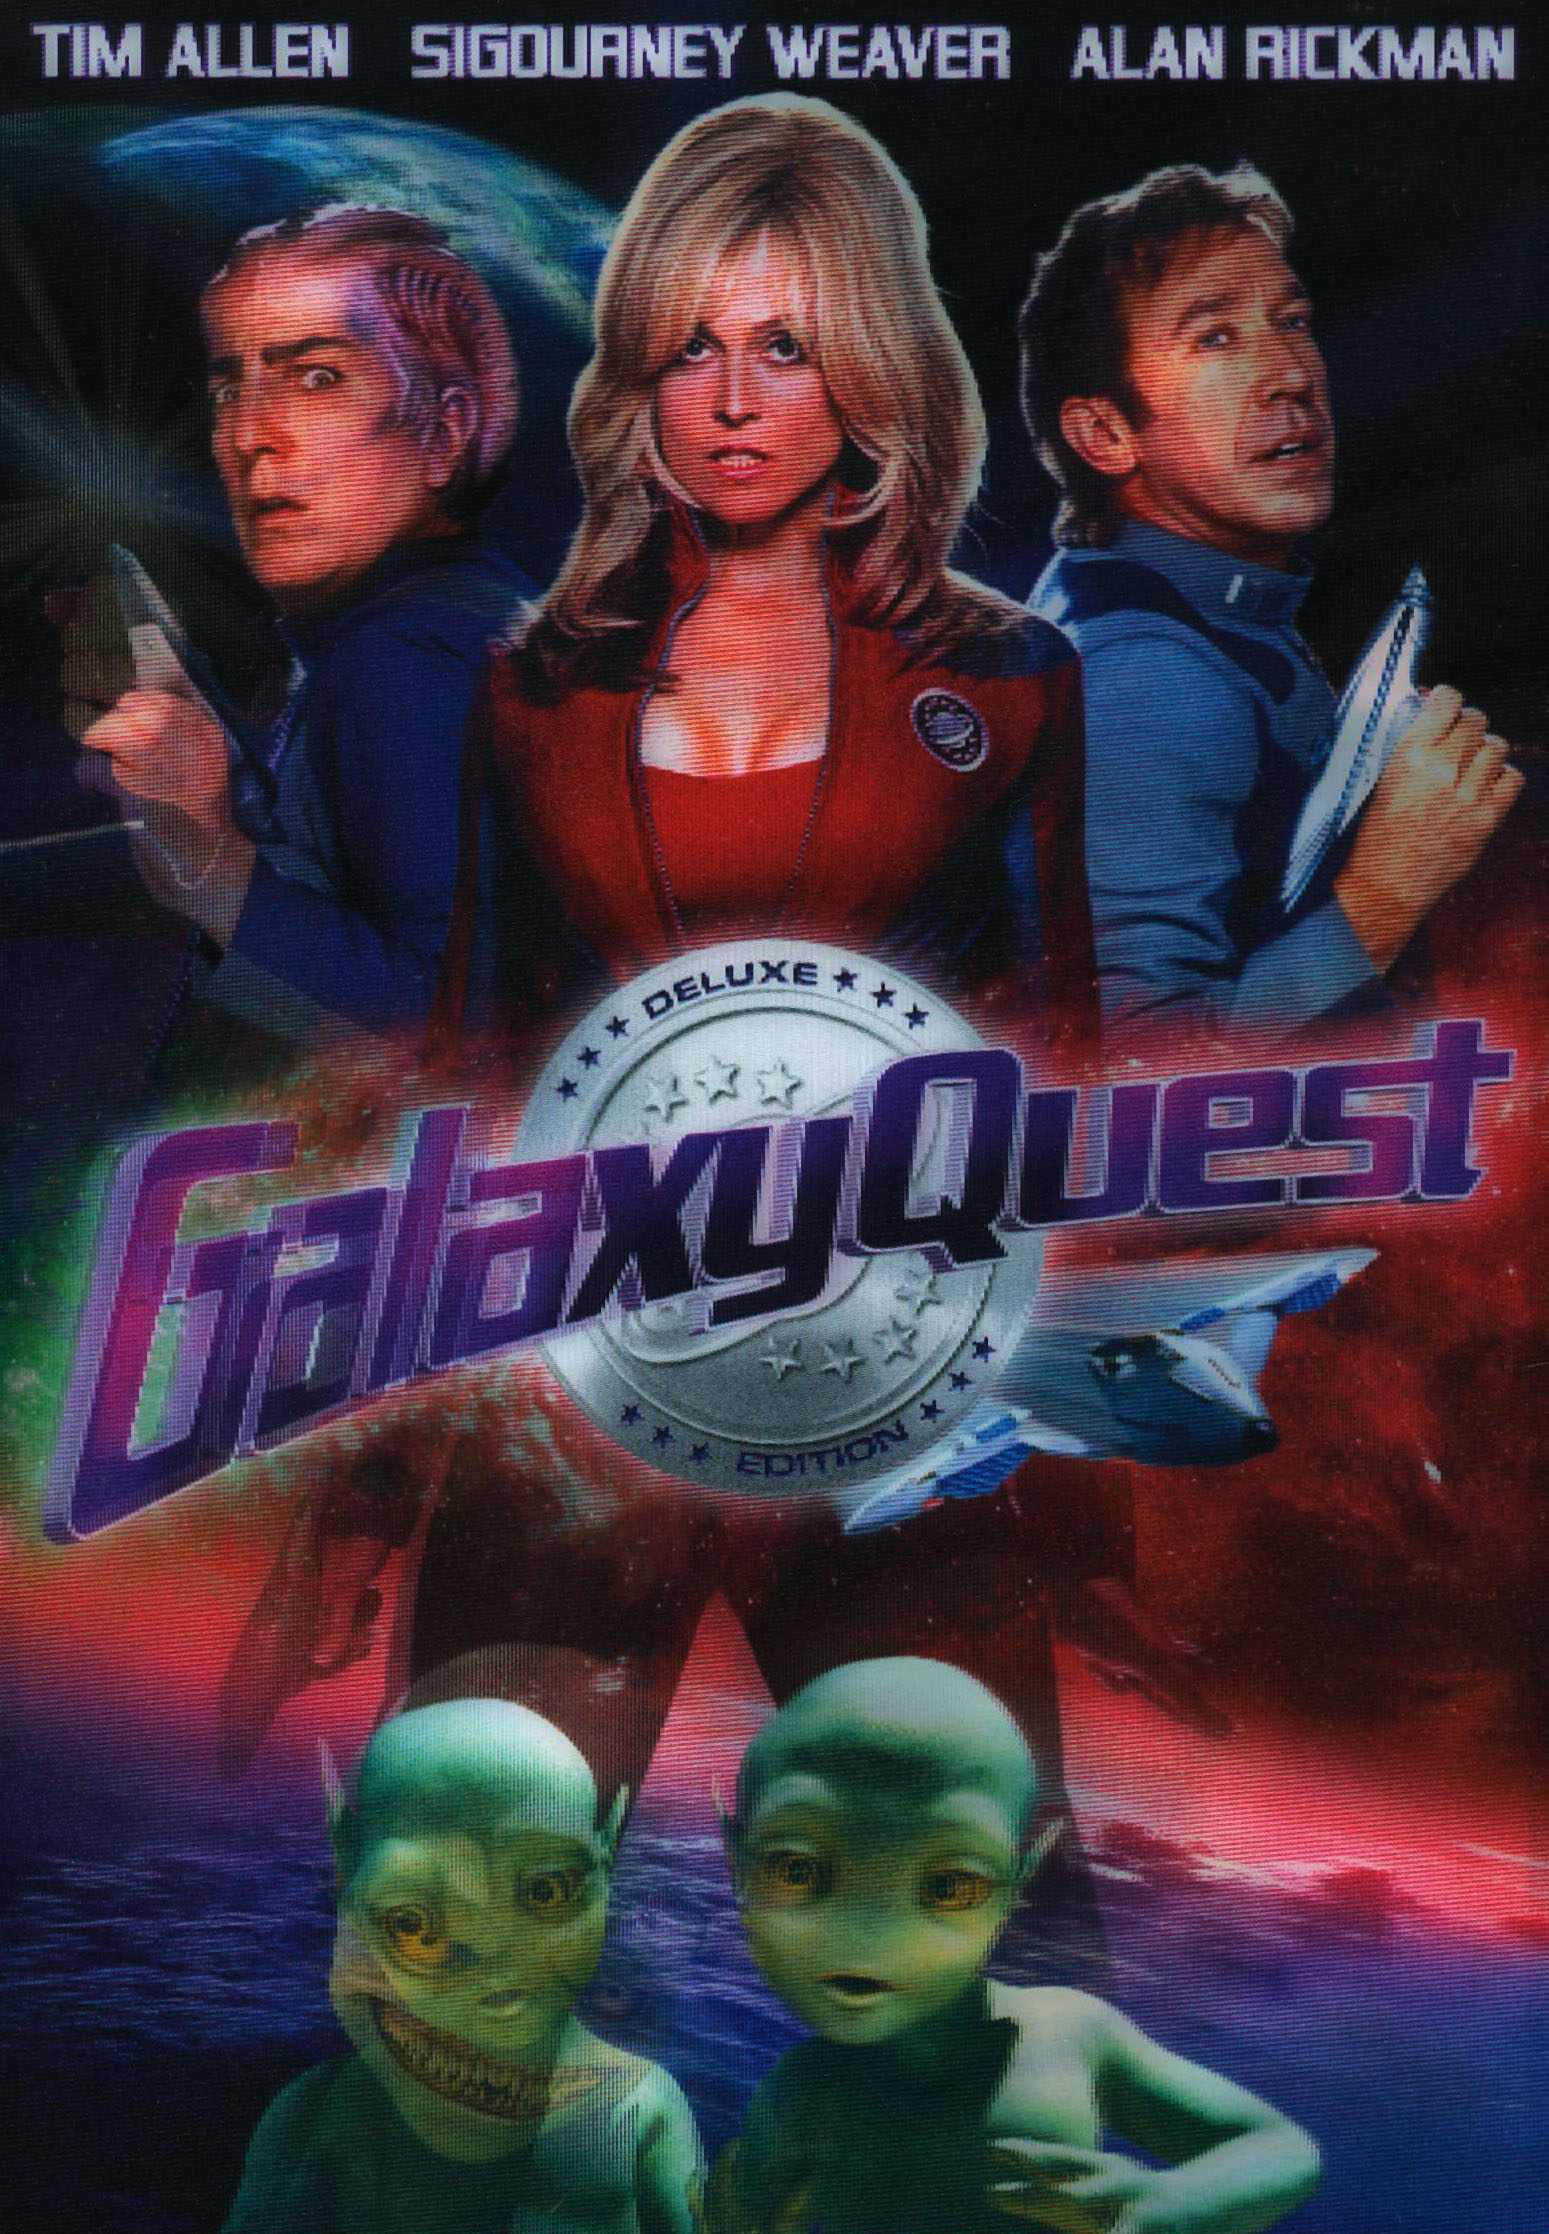 sigourney weaver galaxy quest deleted scene